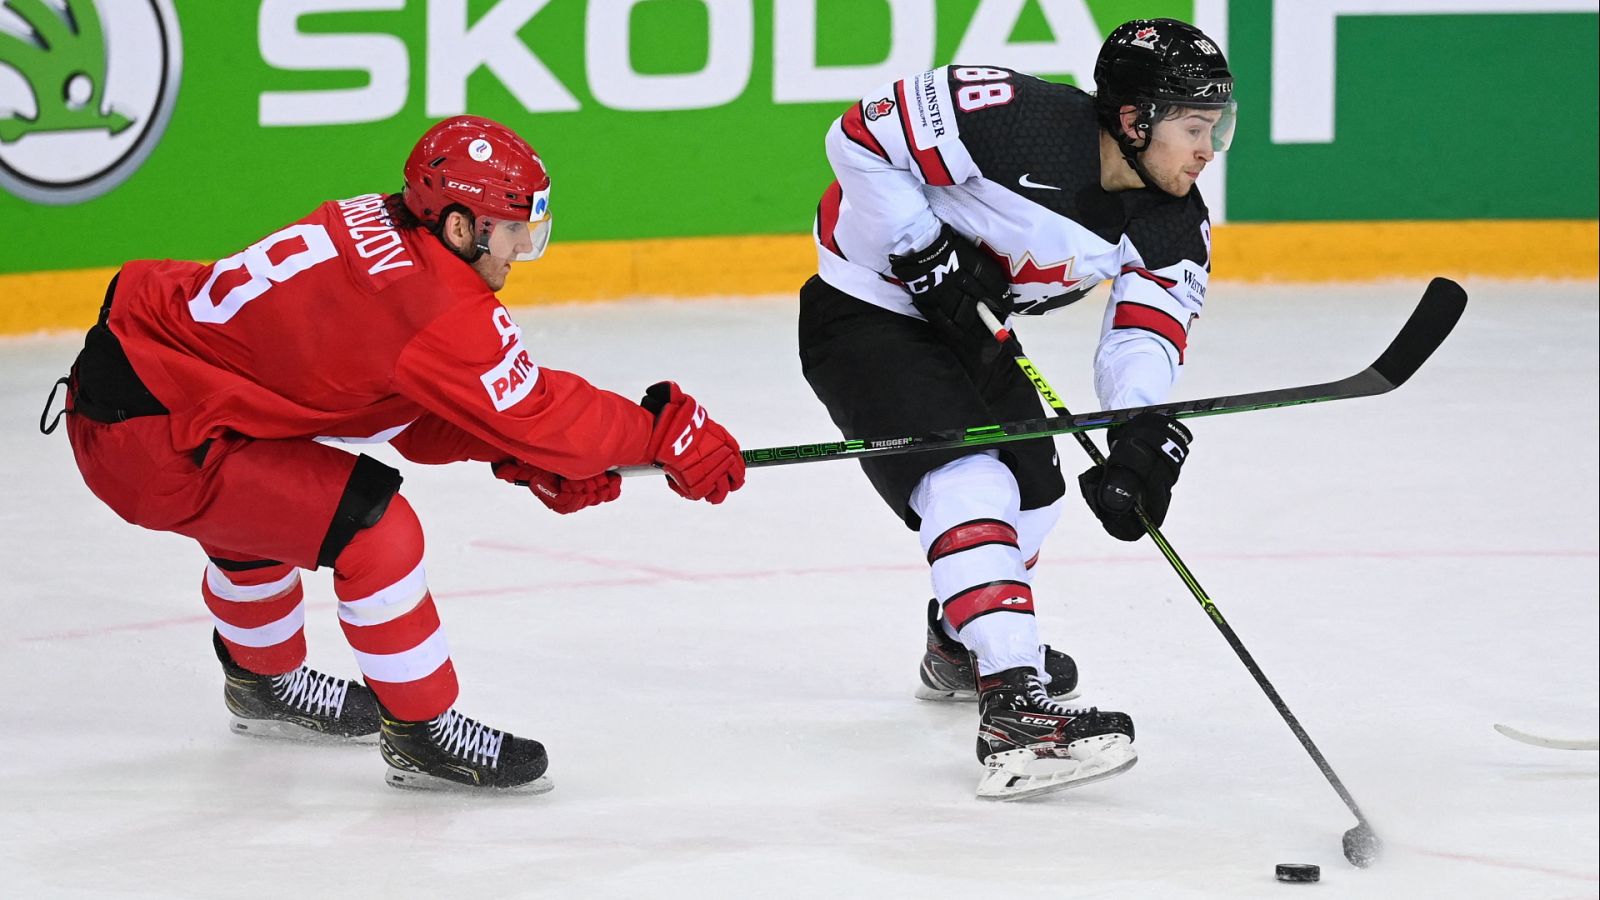 Hockey hielo - Campeonato del mundo masculino 1/4 Final: Rusia - Canadá